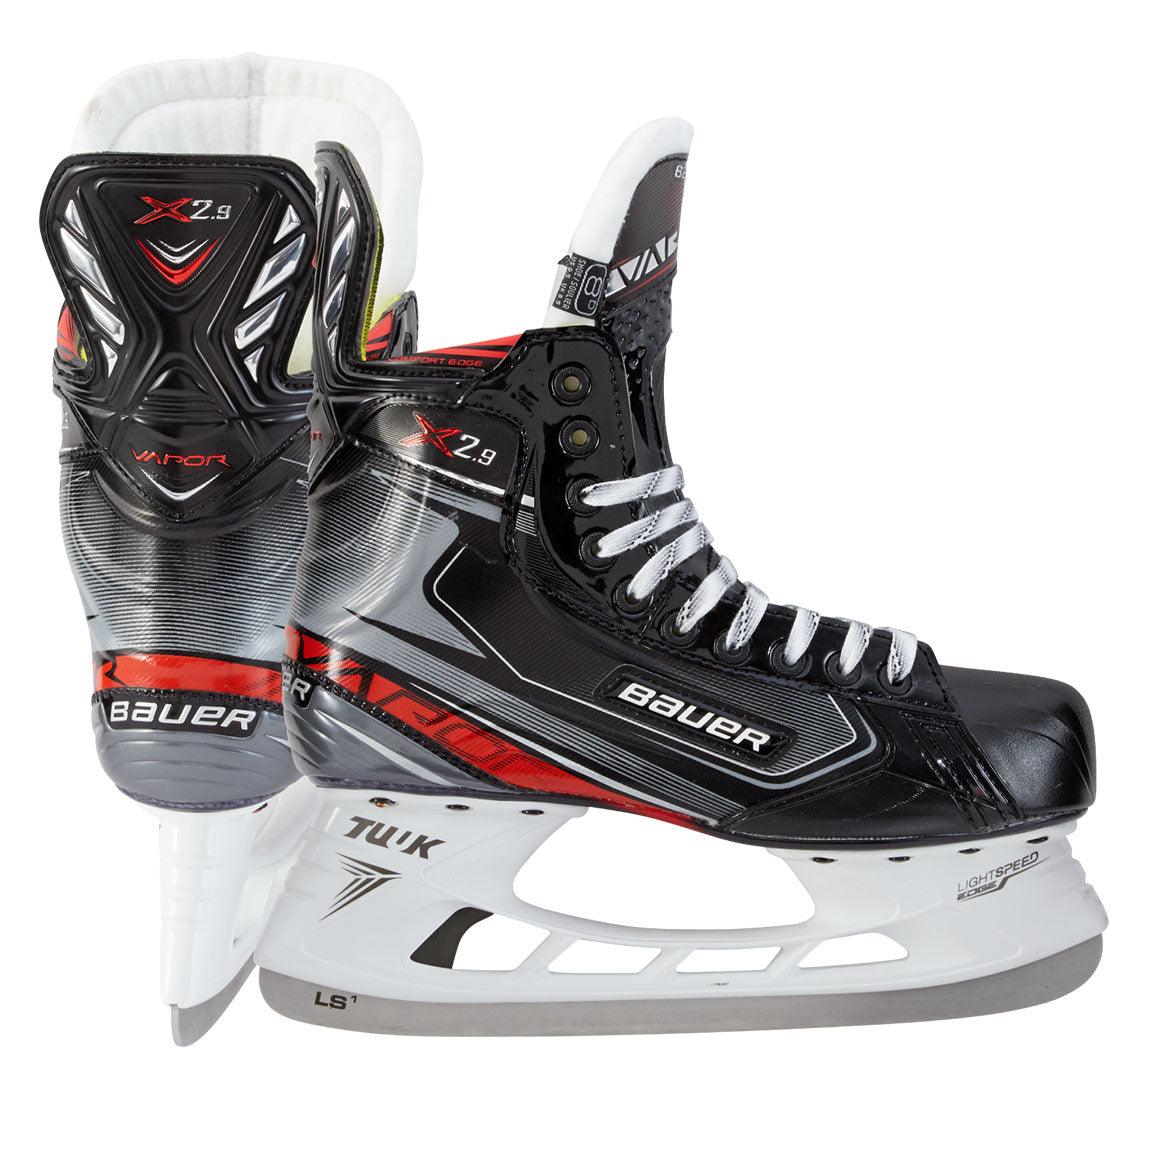 Vapor X2.9 Hockey Skates - Junior - Sports Excellence